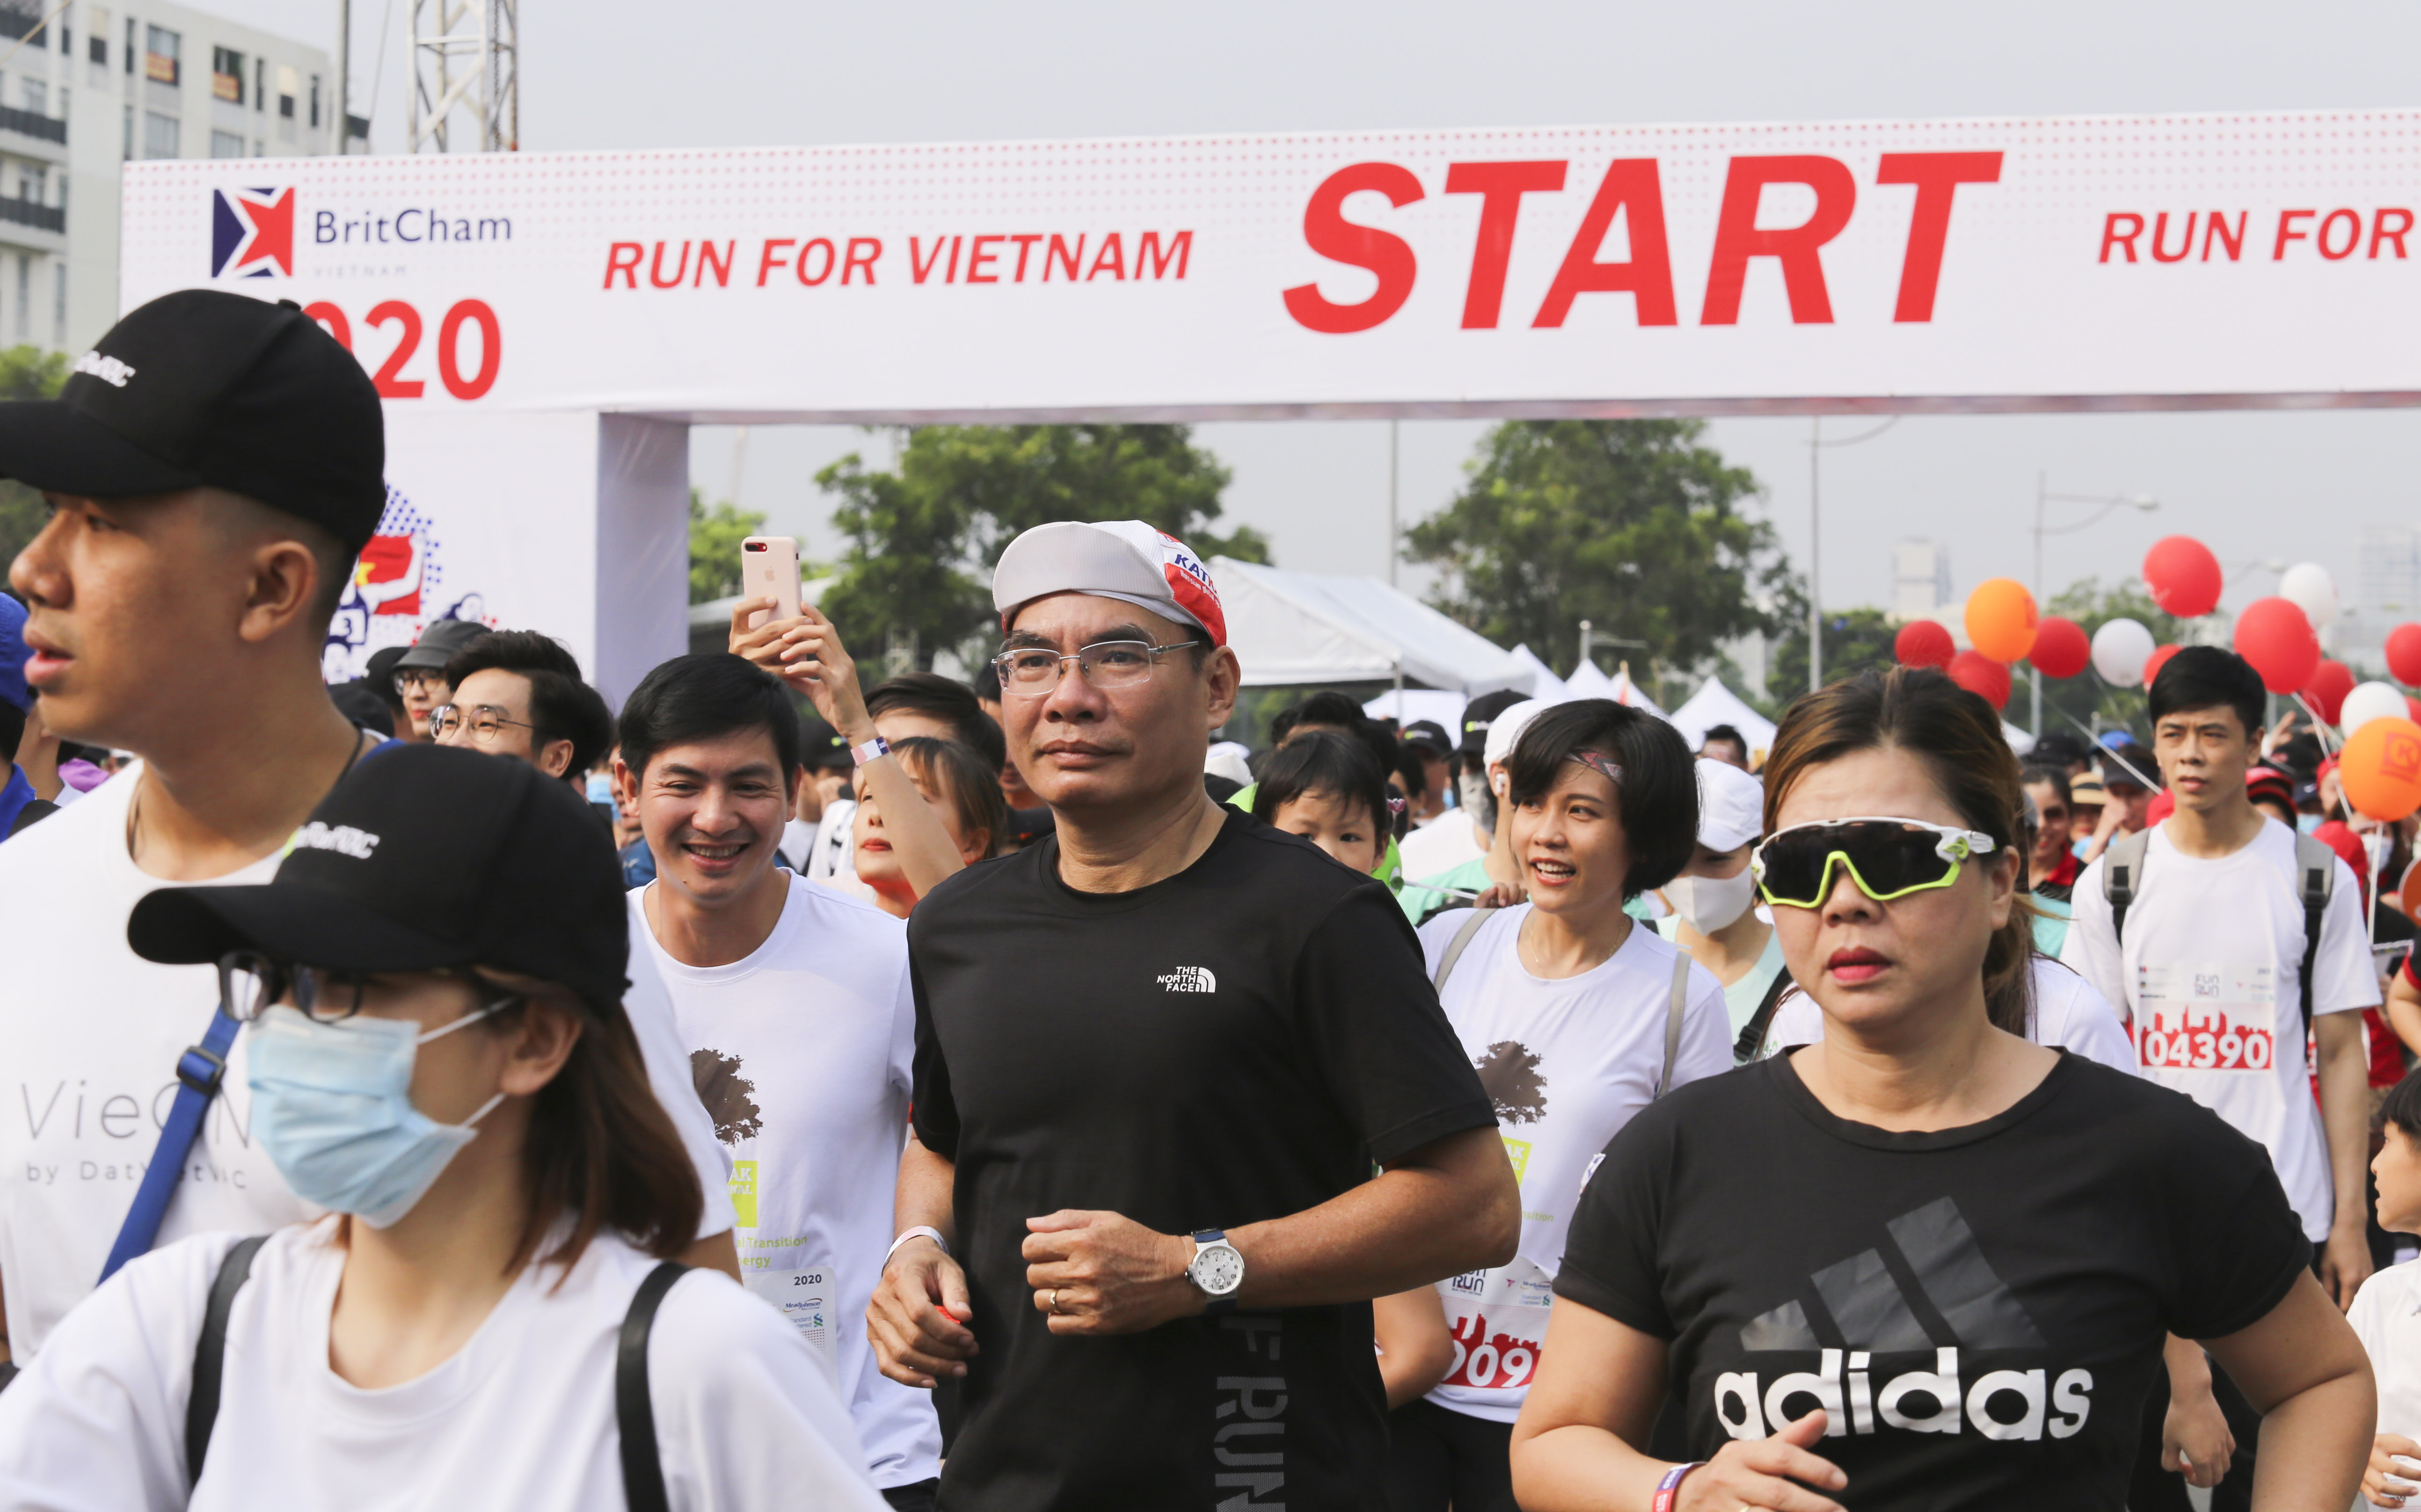 BritCham Fun Run in Ho Chi Minh City spreads charitable spirit amid health crisis